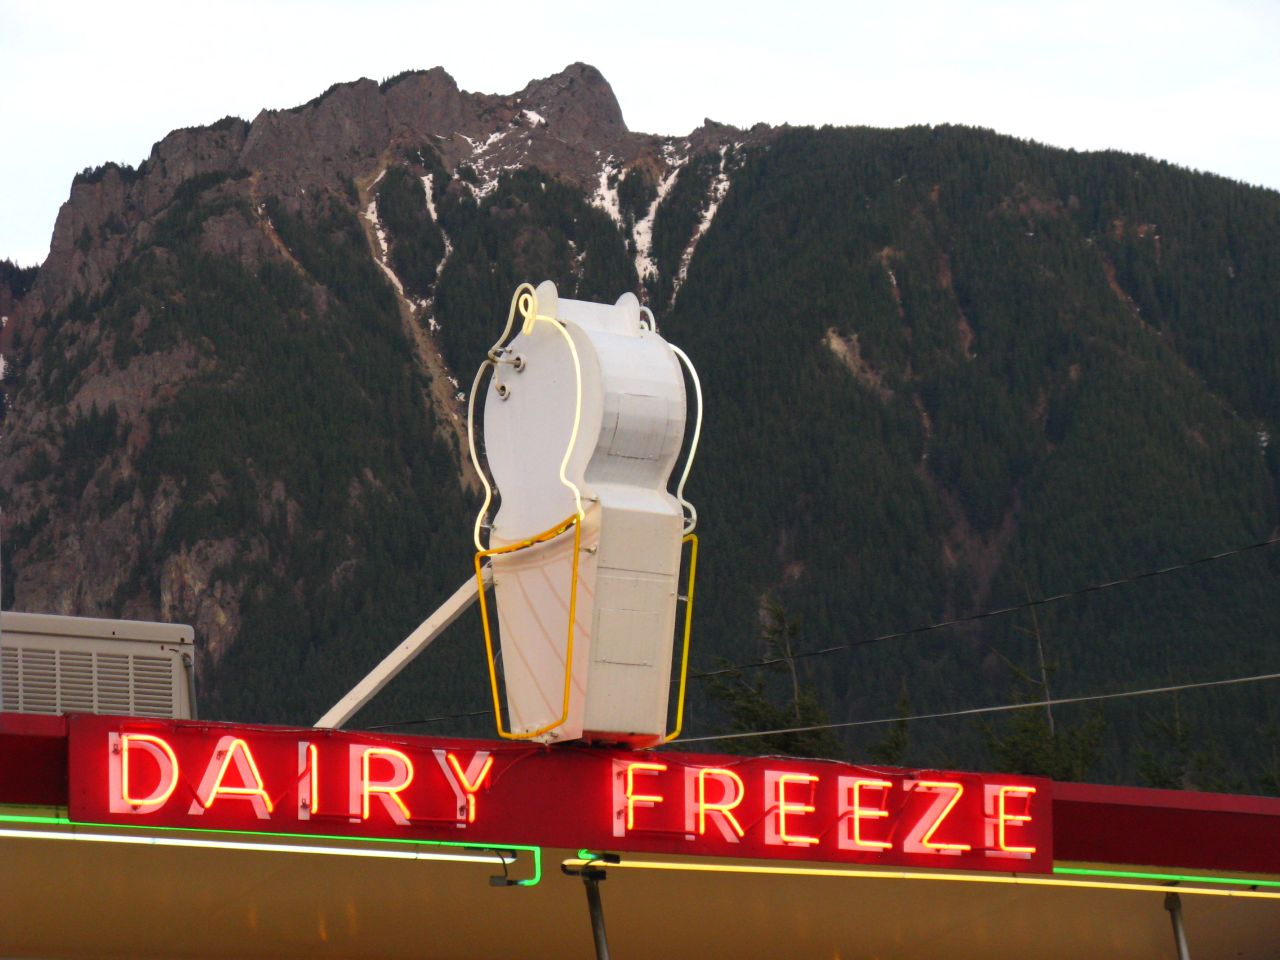 Scott's Dairy Freeze - North Bend, Washington U.S.A. - February 3, 2009